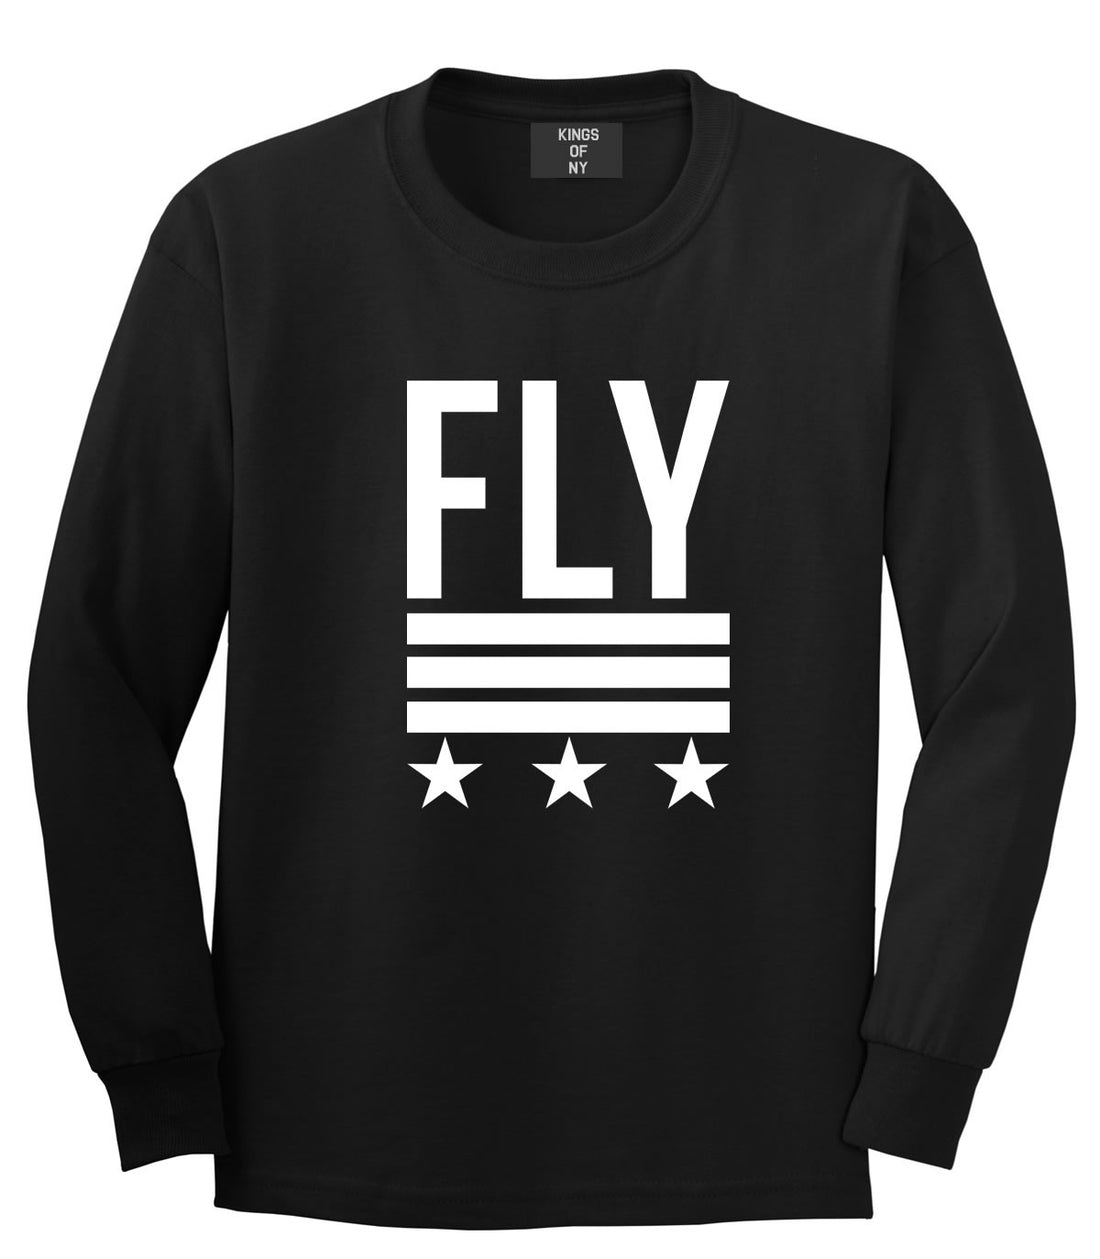 Kings Of NY Fly Stars Long Sleeve T-Shirt in Black